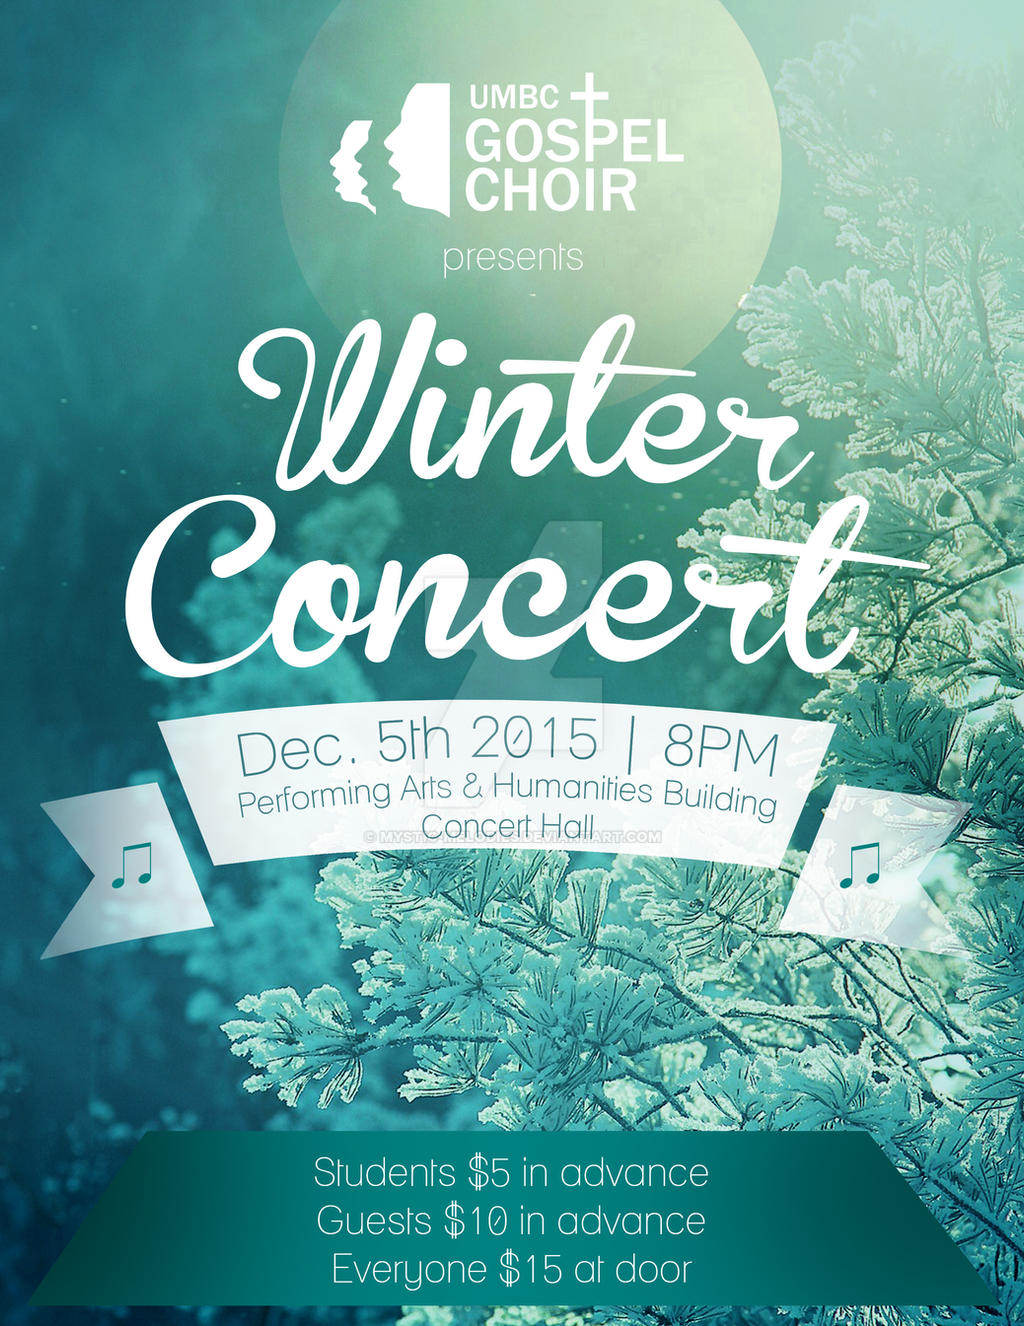 Gospel Choir Winter Concert Flyer 2015 by mysticmelodies on DeviantArt